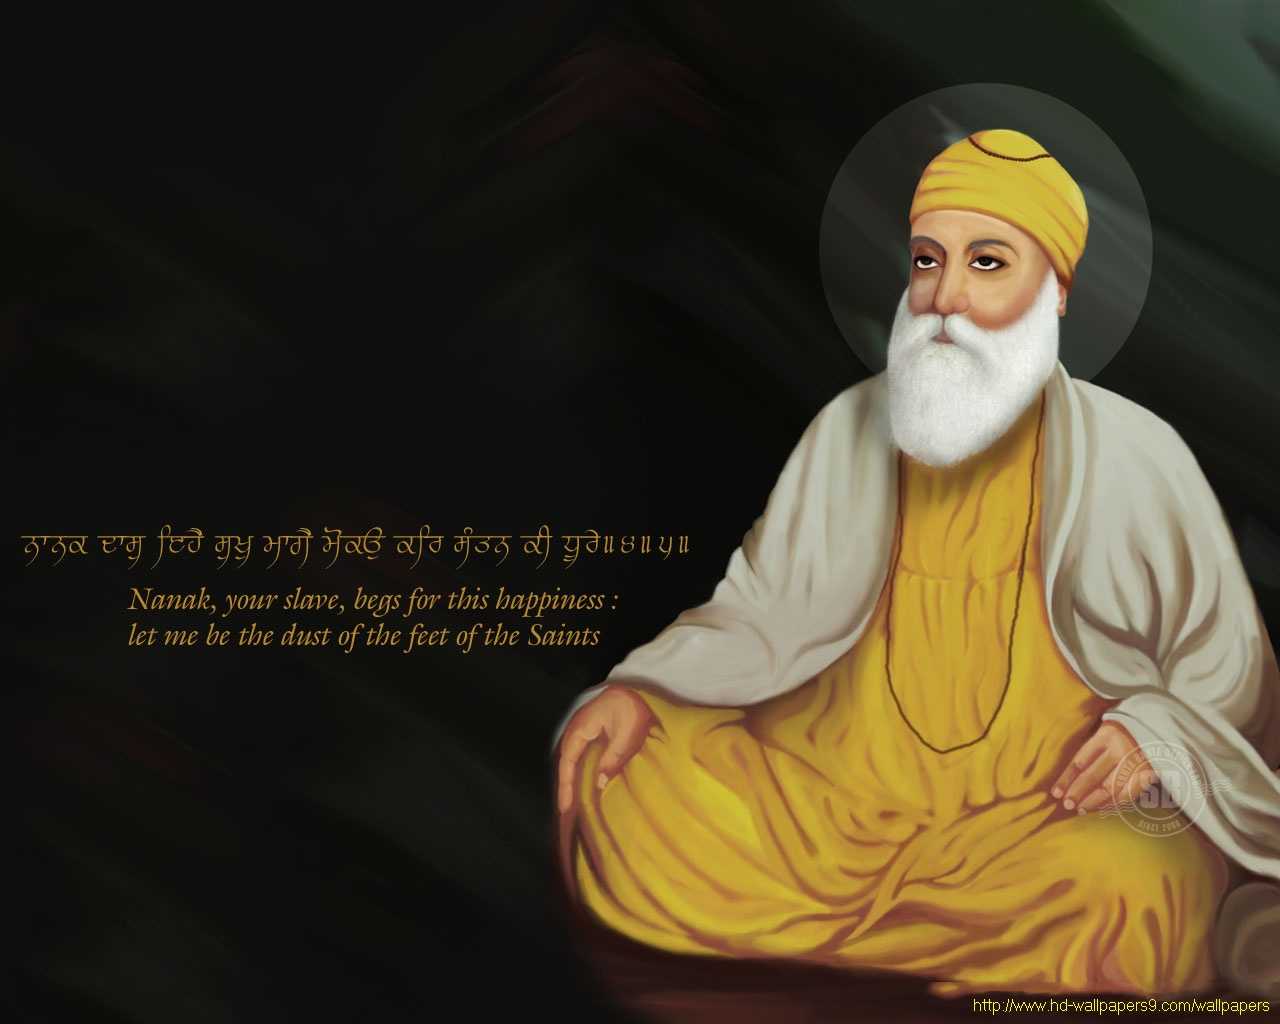 Sikhism Wallpaper Image